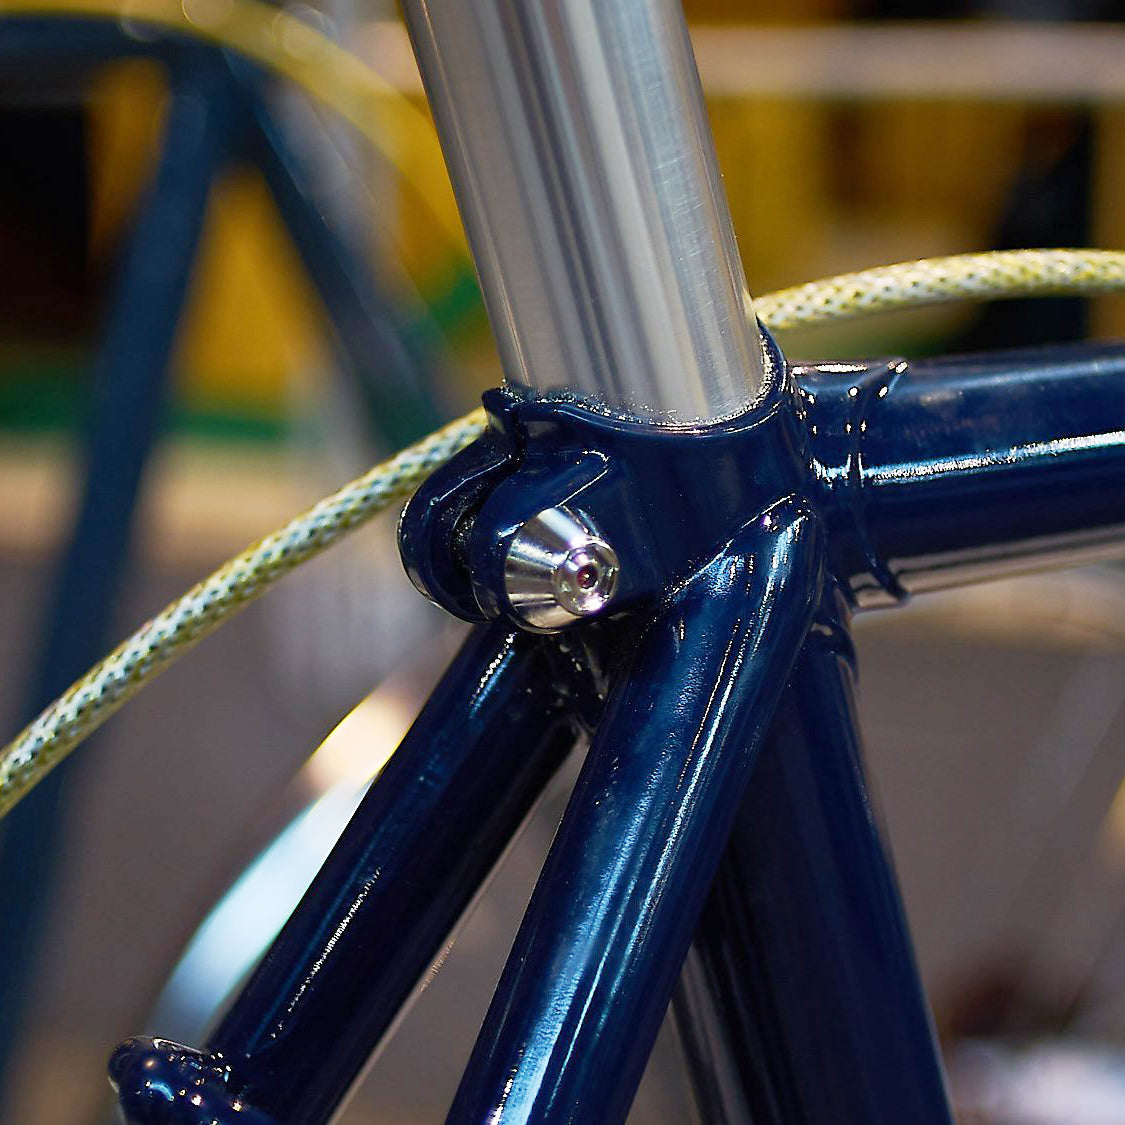 Handy Hexagonal Locks : bike locks